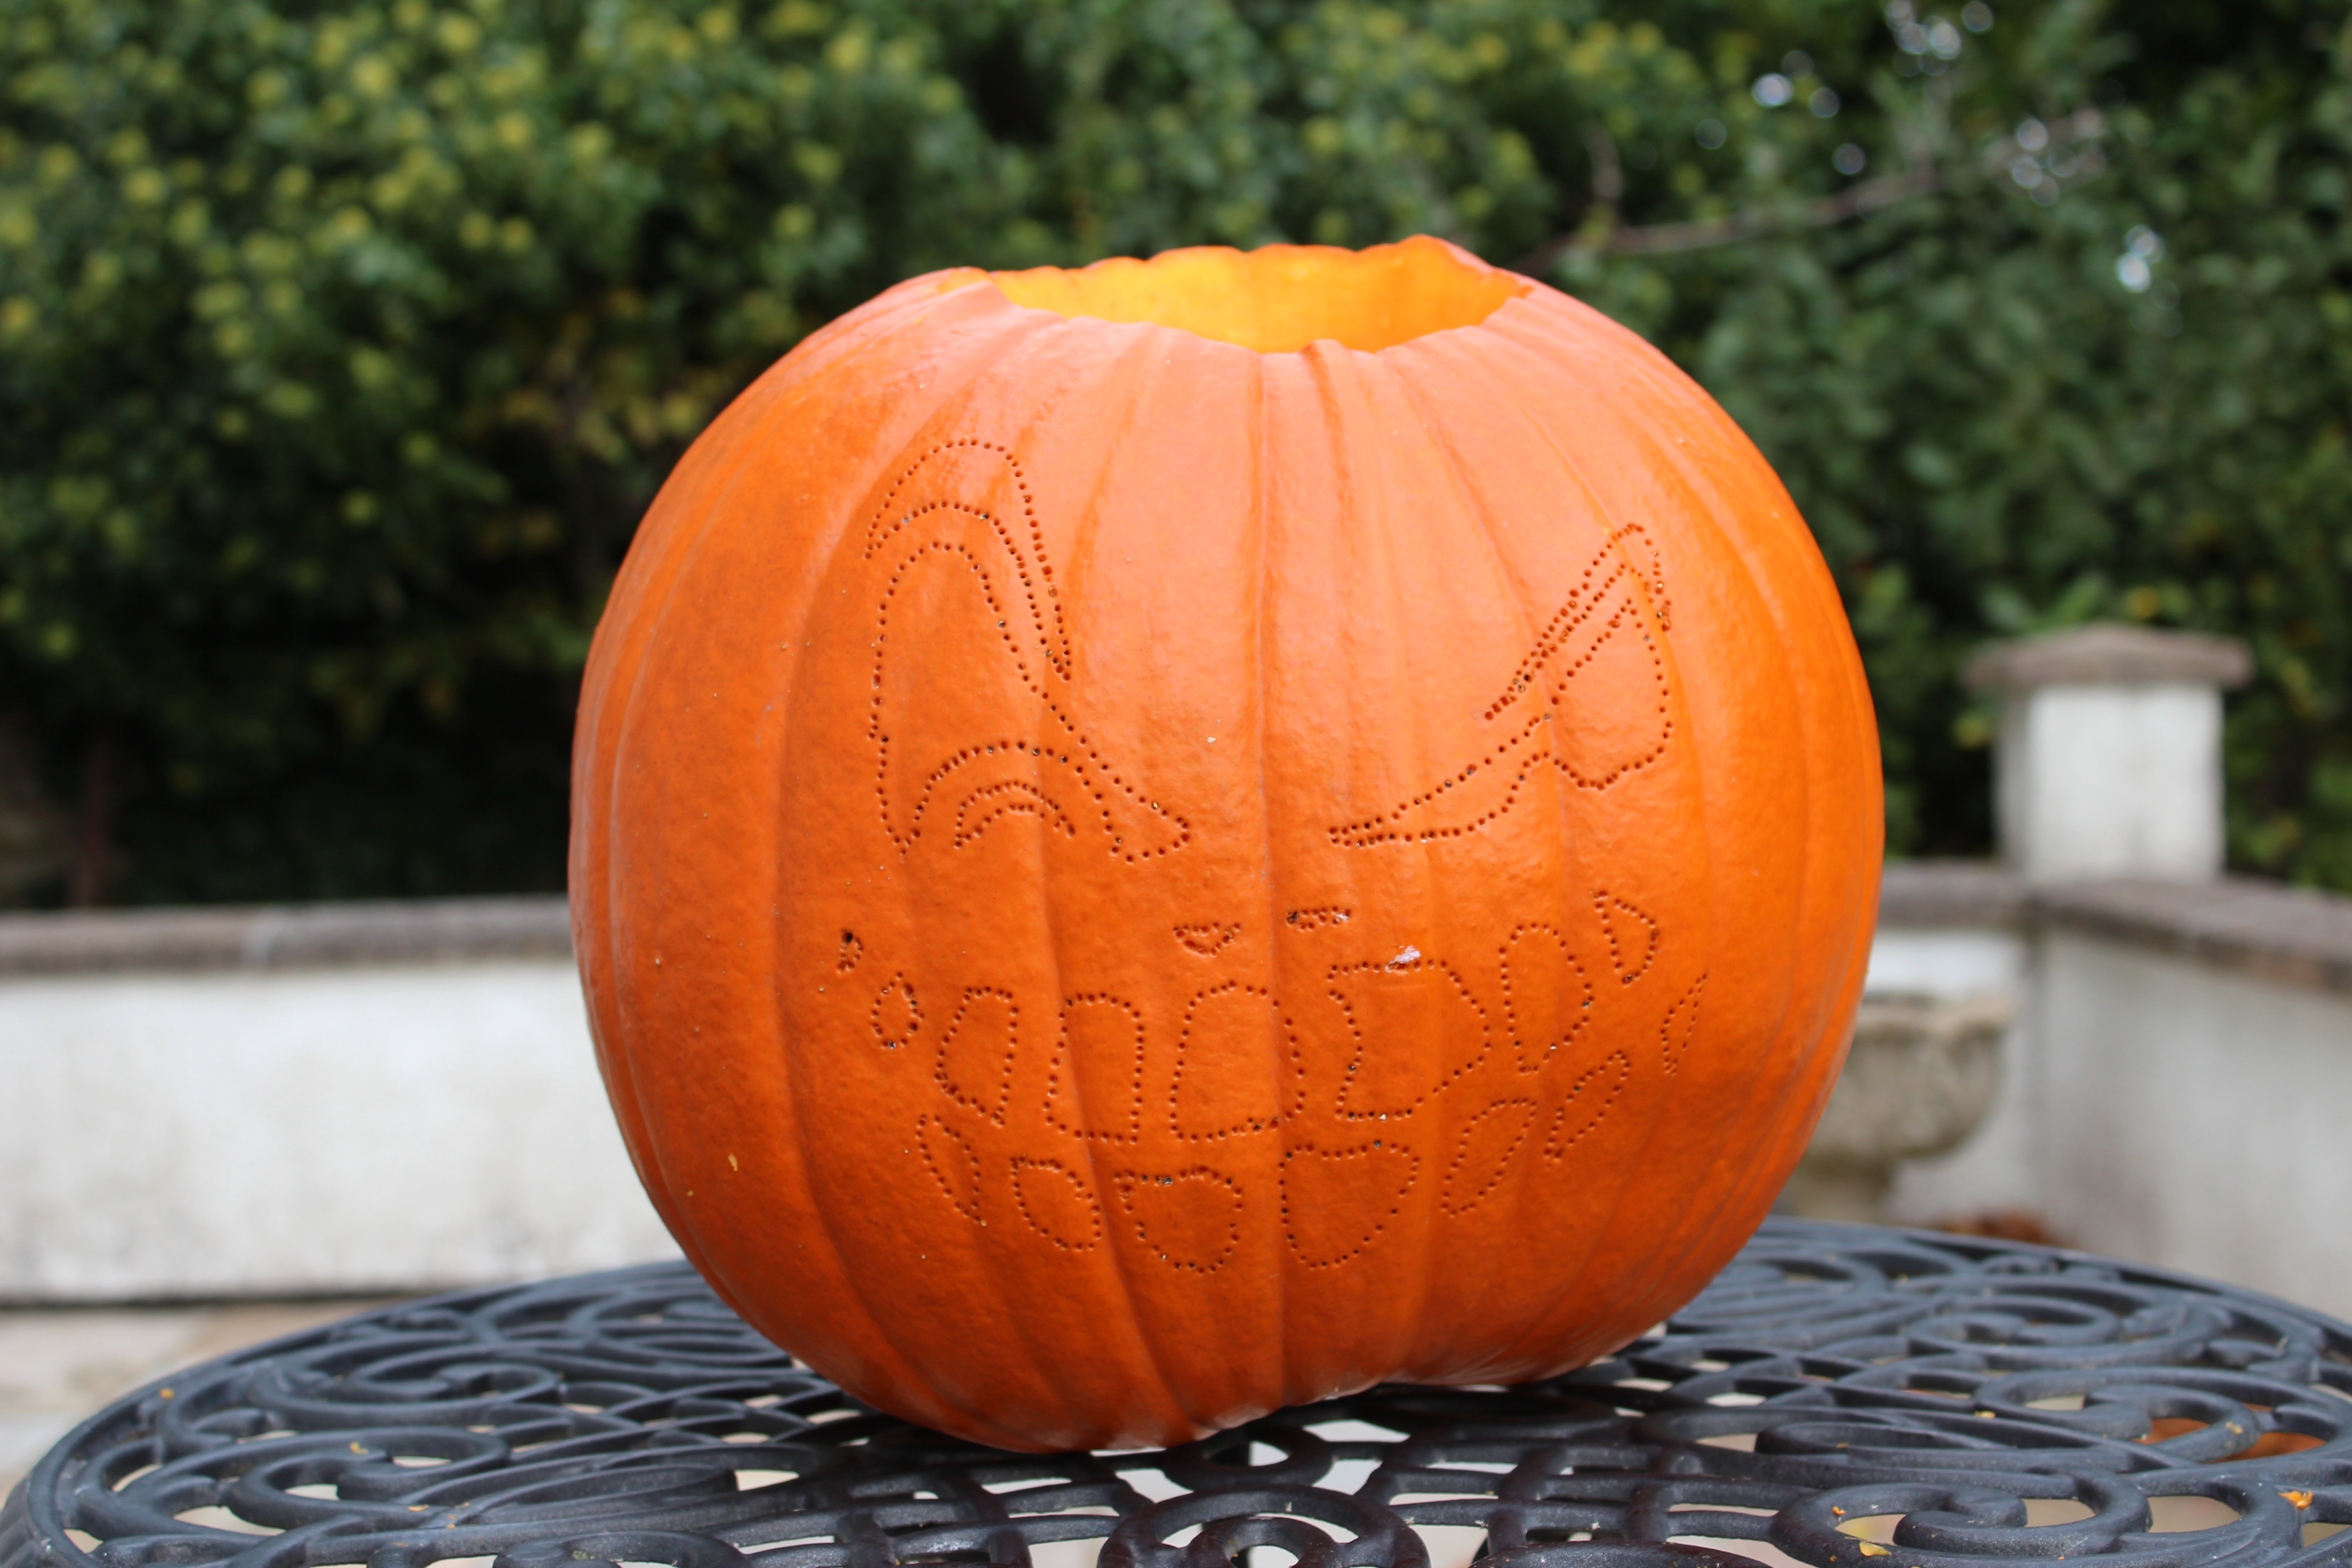 How do you carve a pumpkin? Draw the face